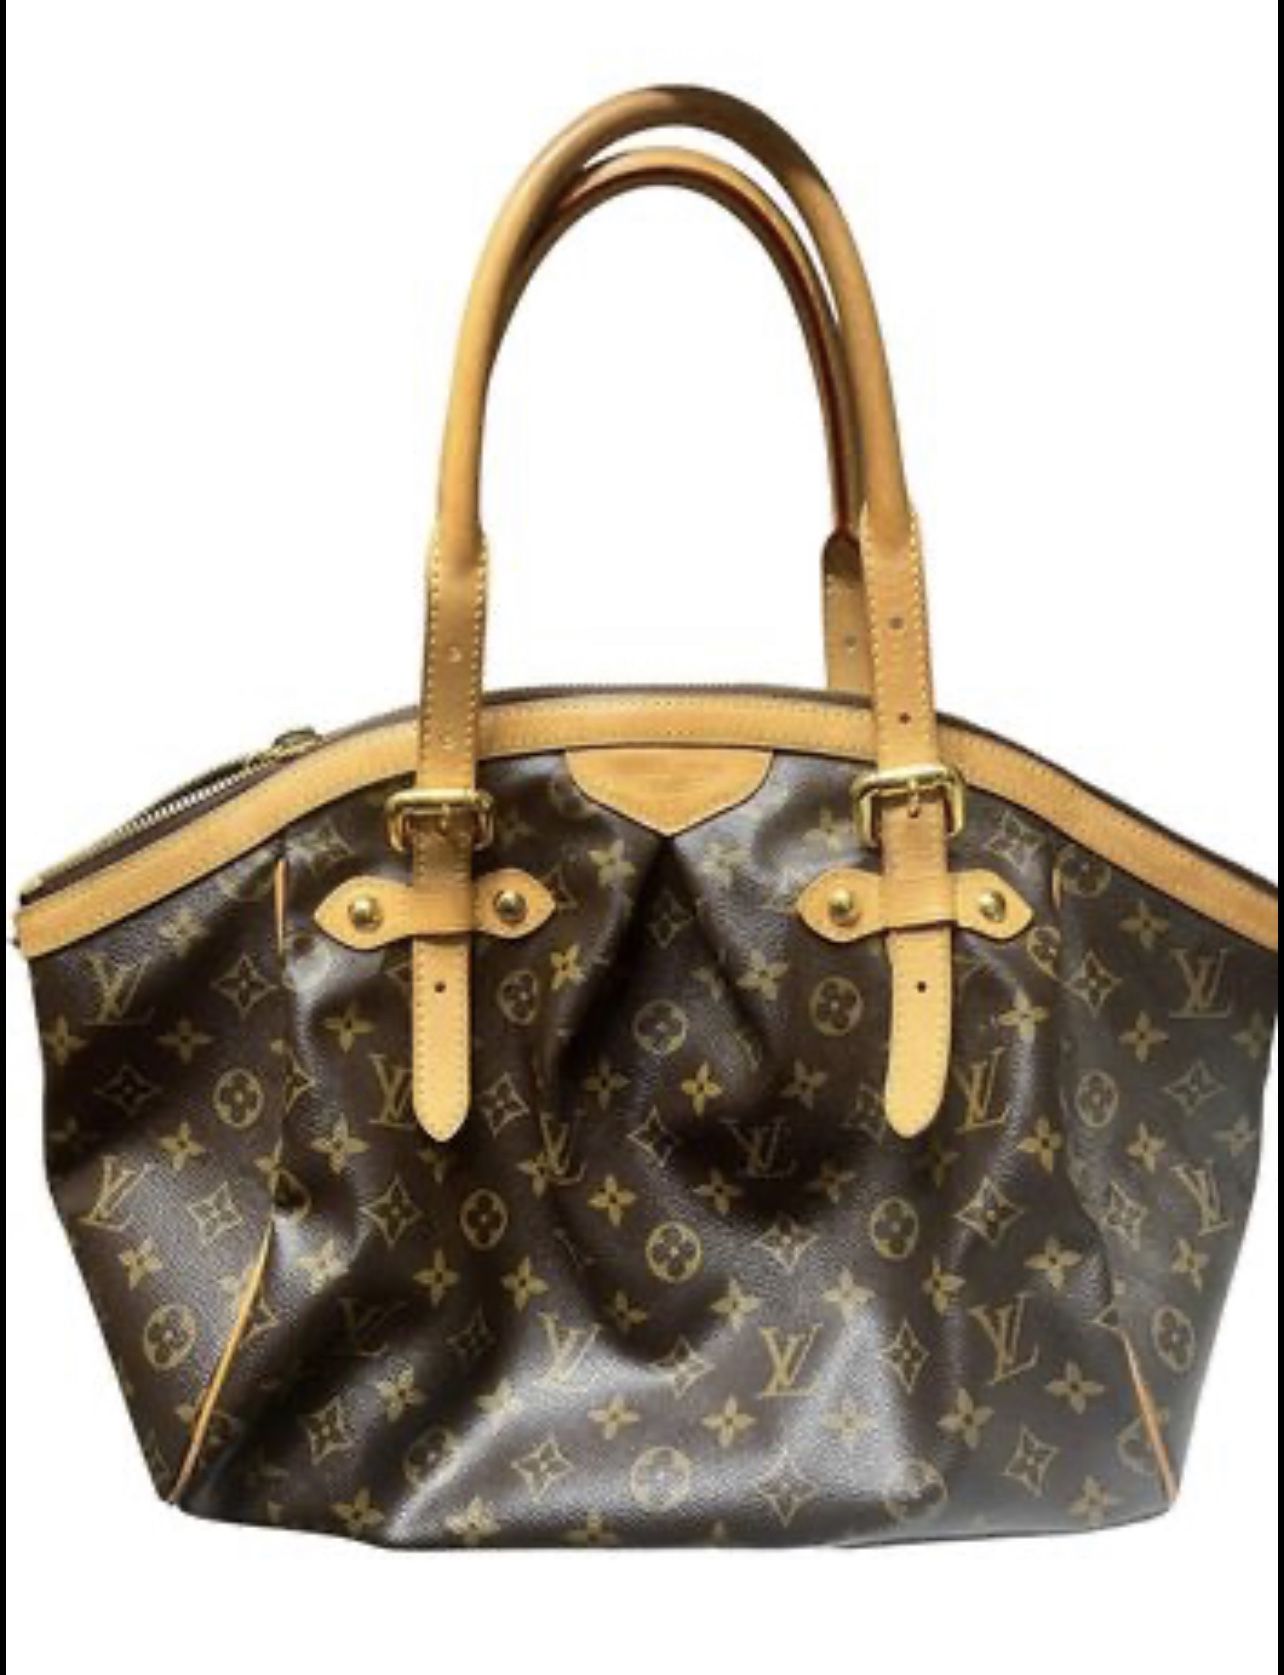 Authentic Used louis Vuitton Handbag monogram tivoli for Sale in Miami, FL  - OfferUp